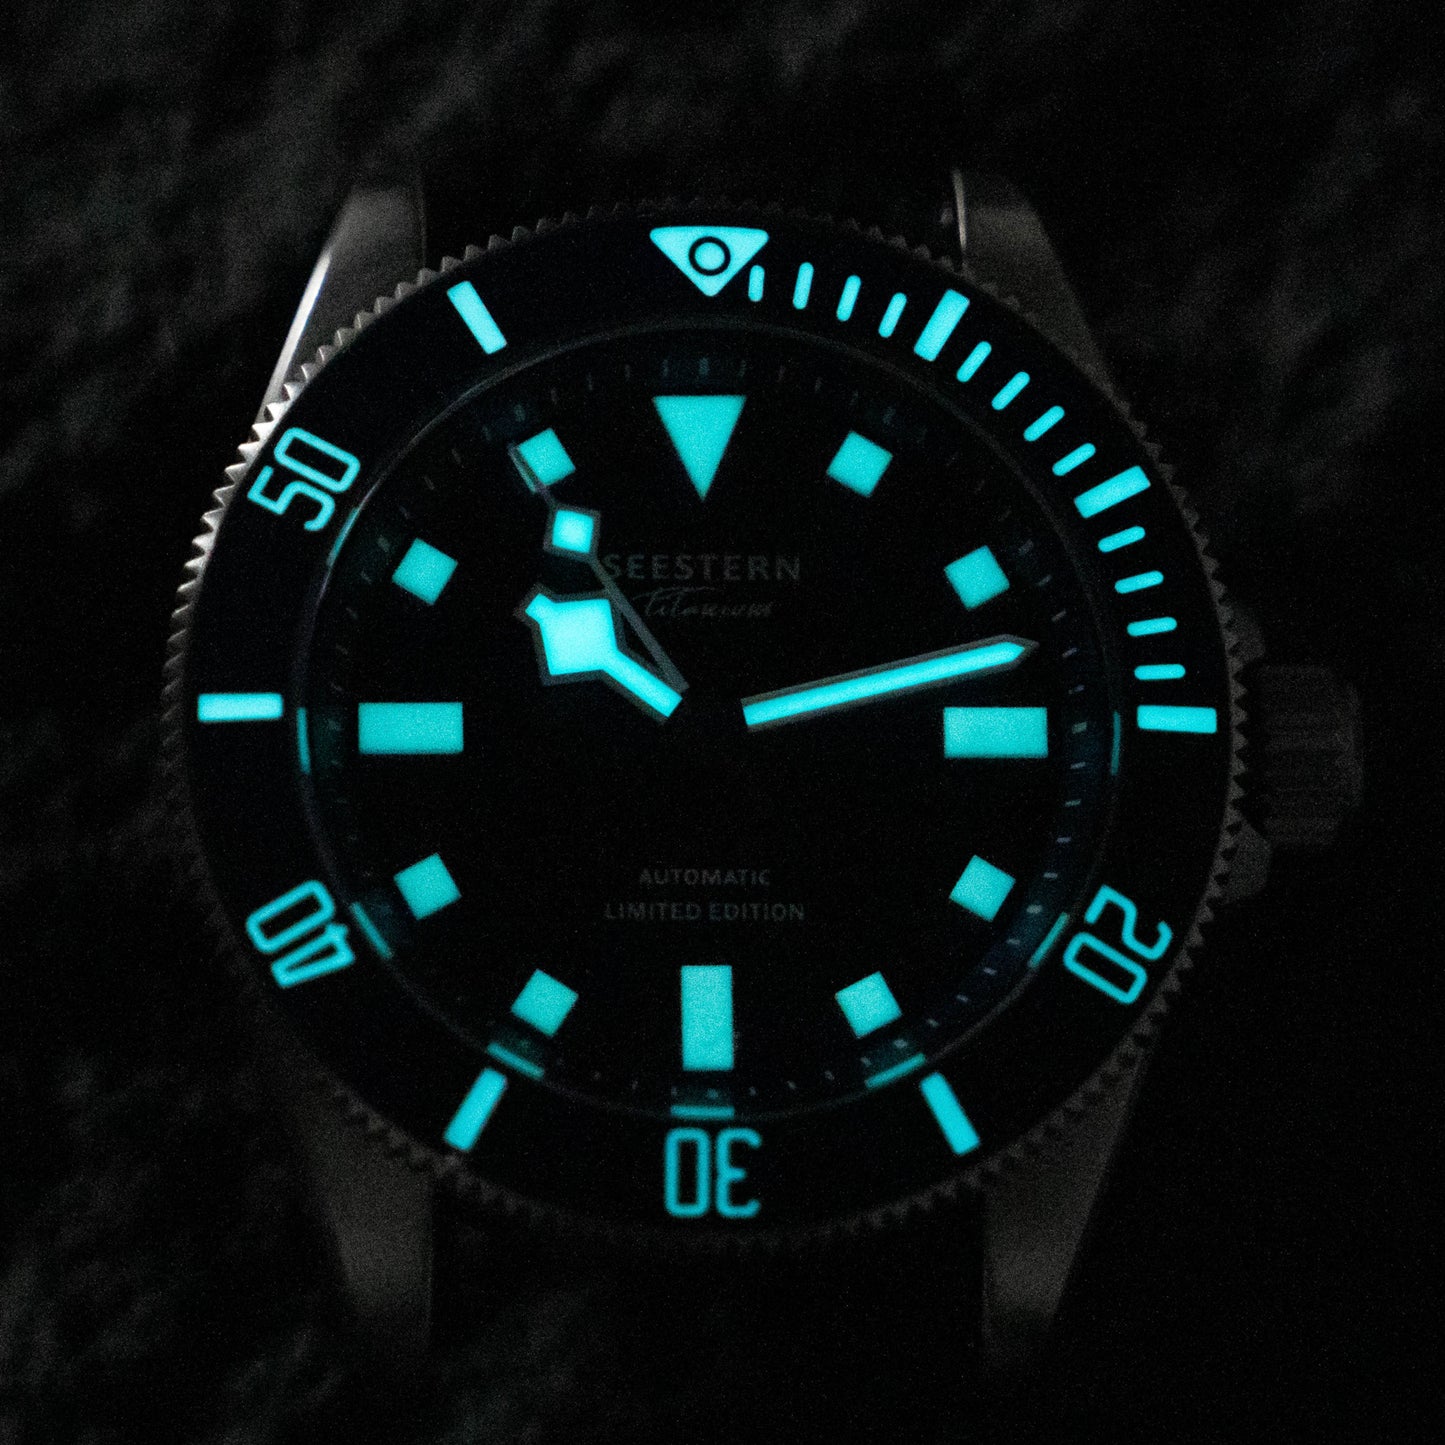 Seestern 430 Titanium Professional Diver (Seagull ST2130 movement)